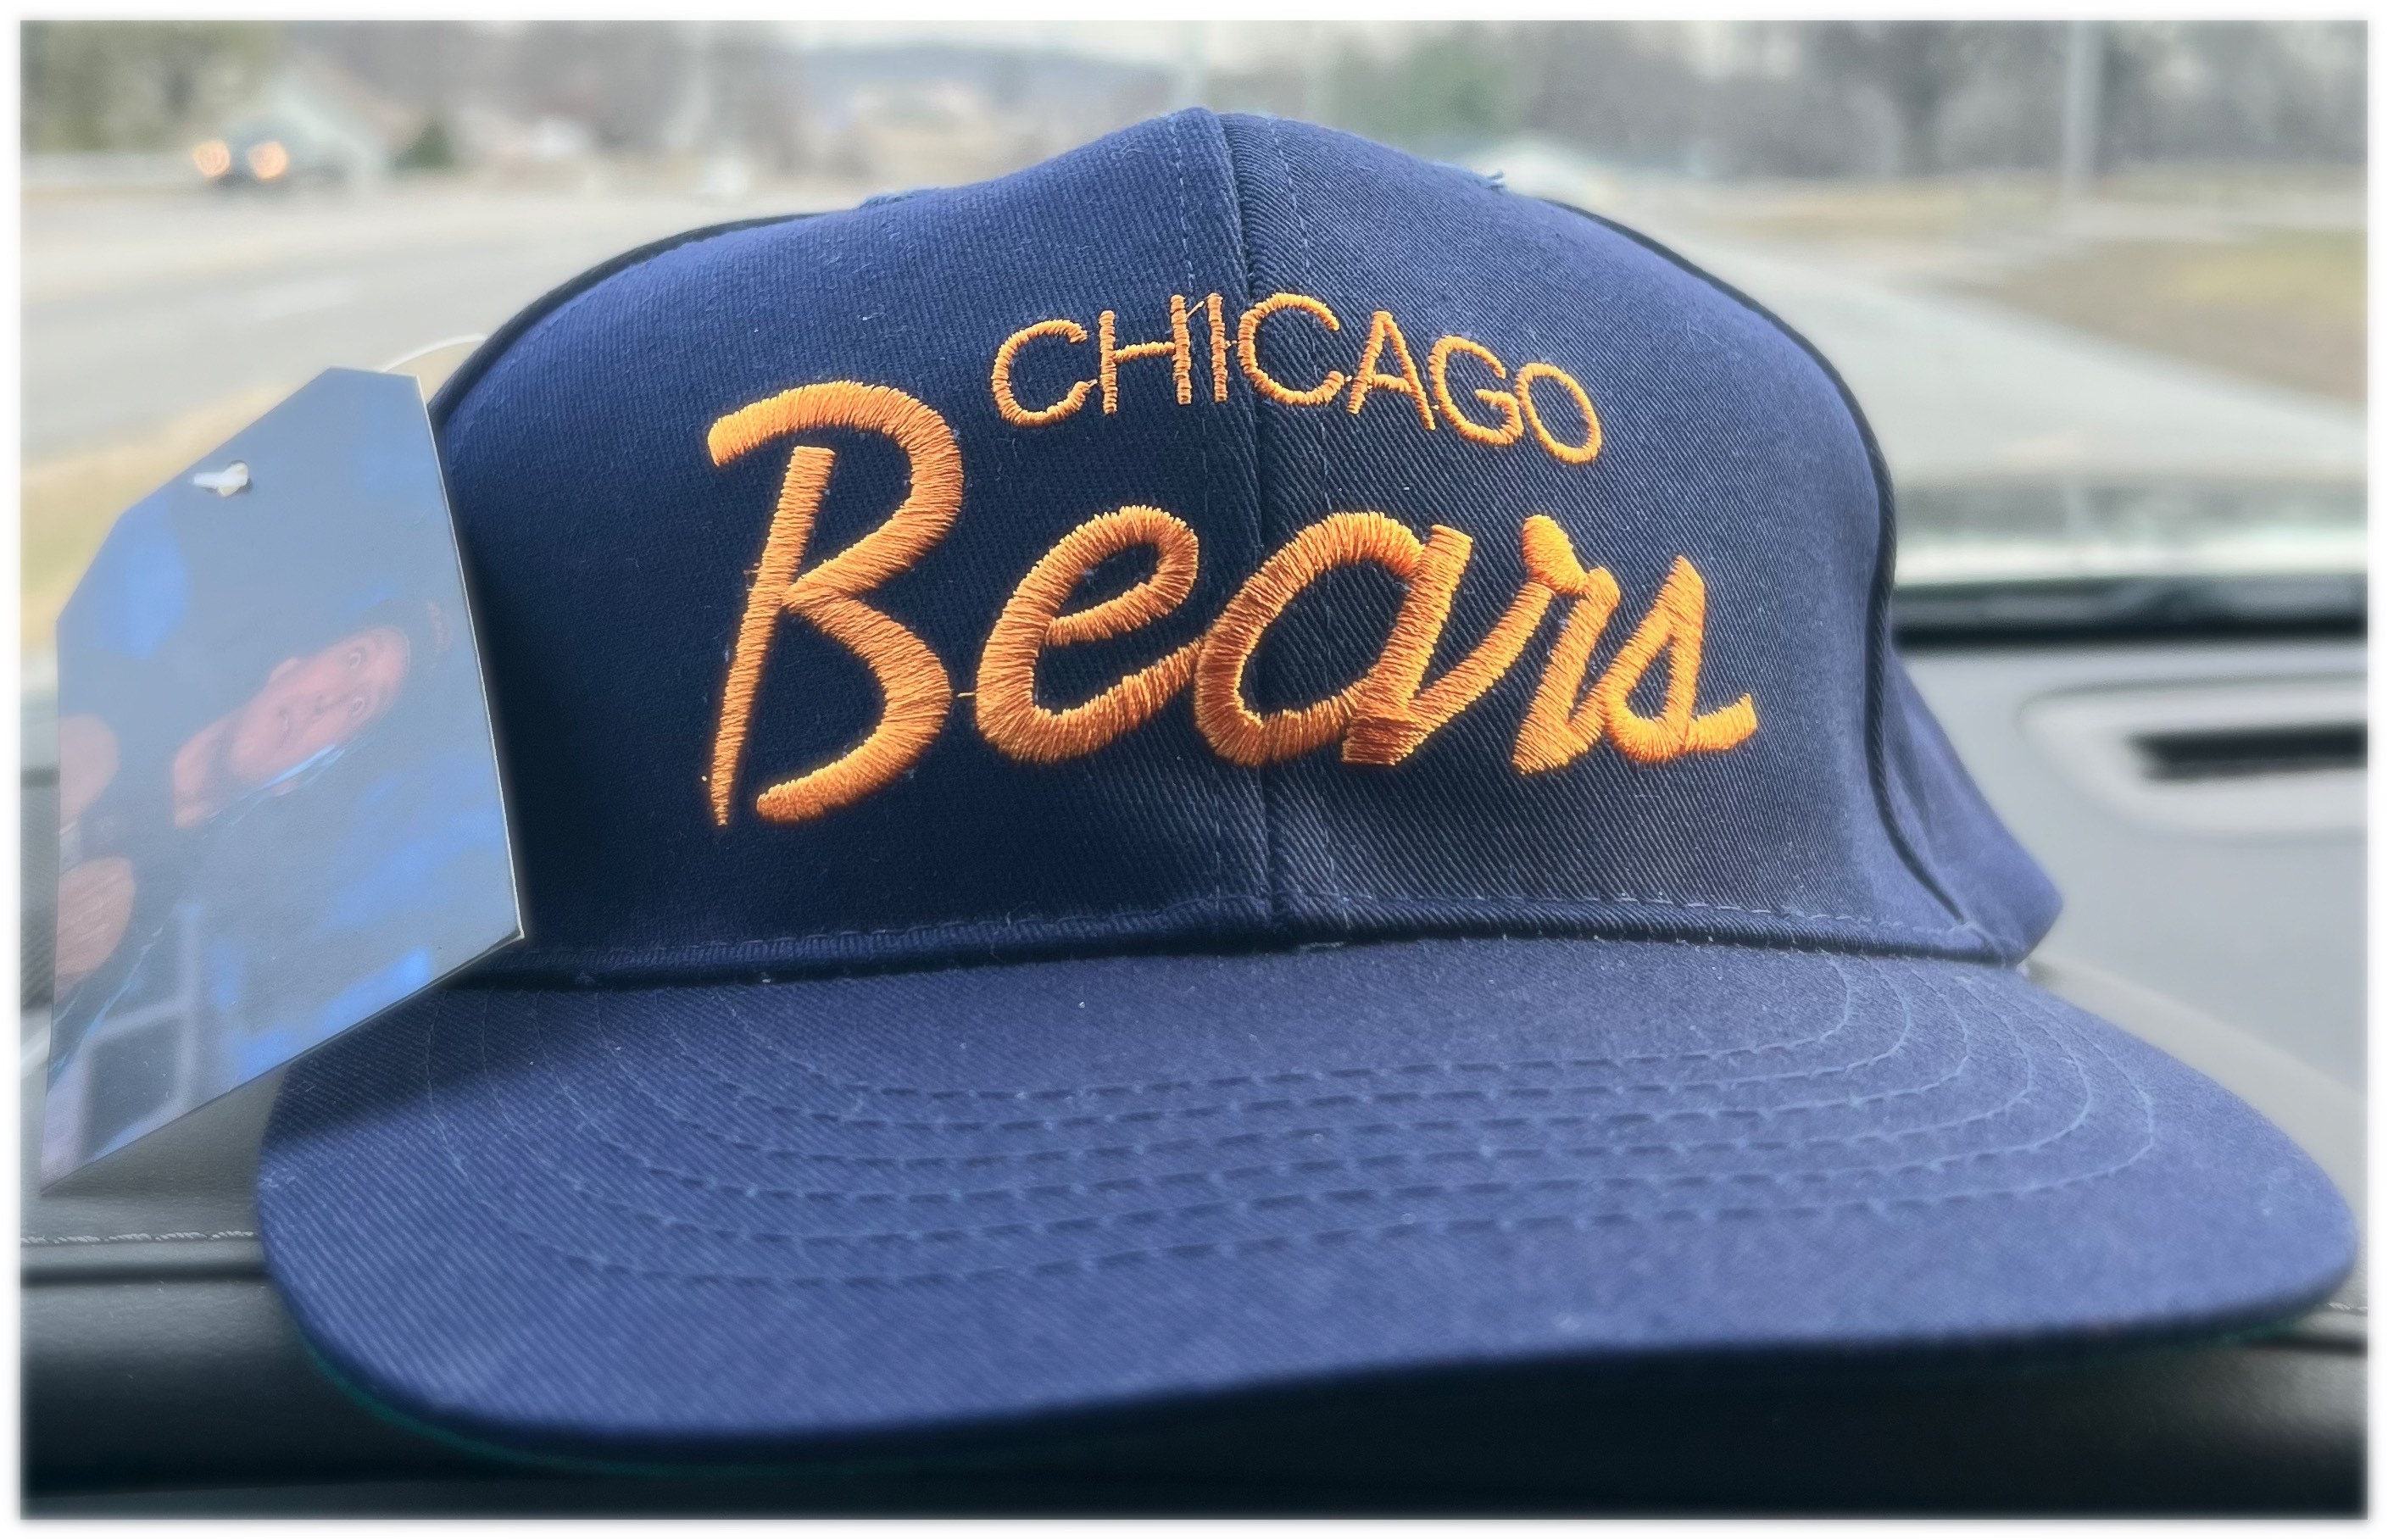 CHICAGO BEARS New Era Snapback Script Hat Cap Vintage 90s 